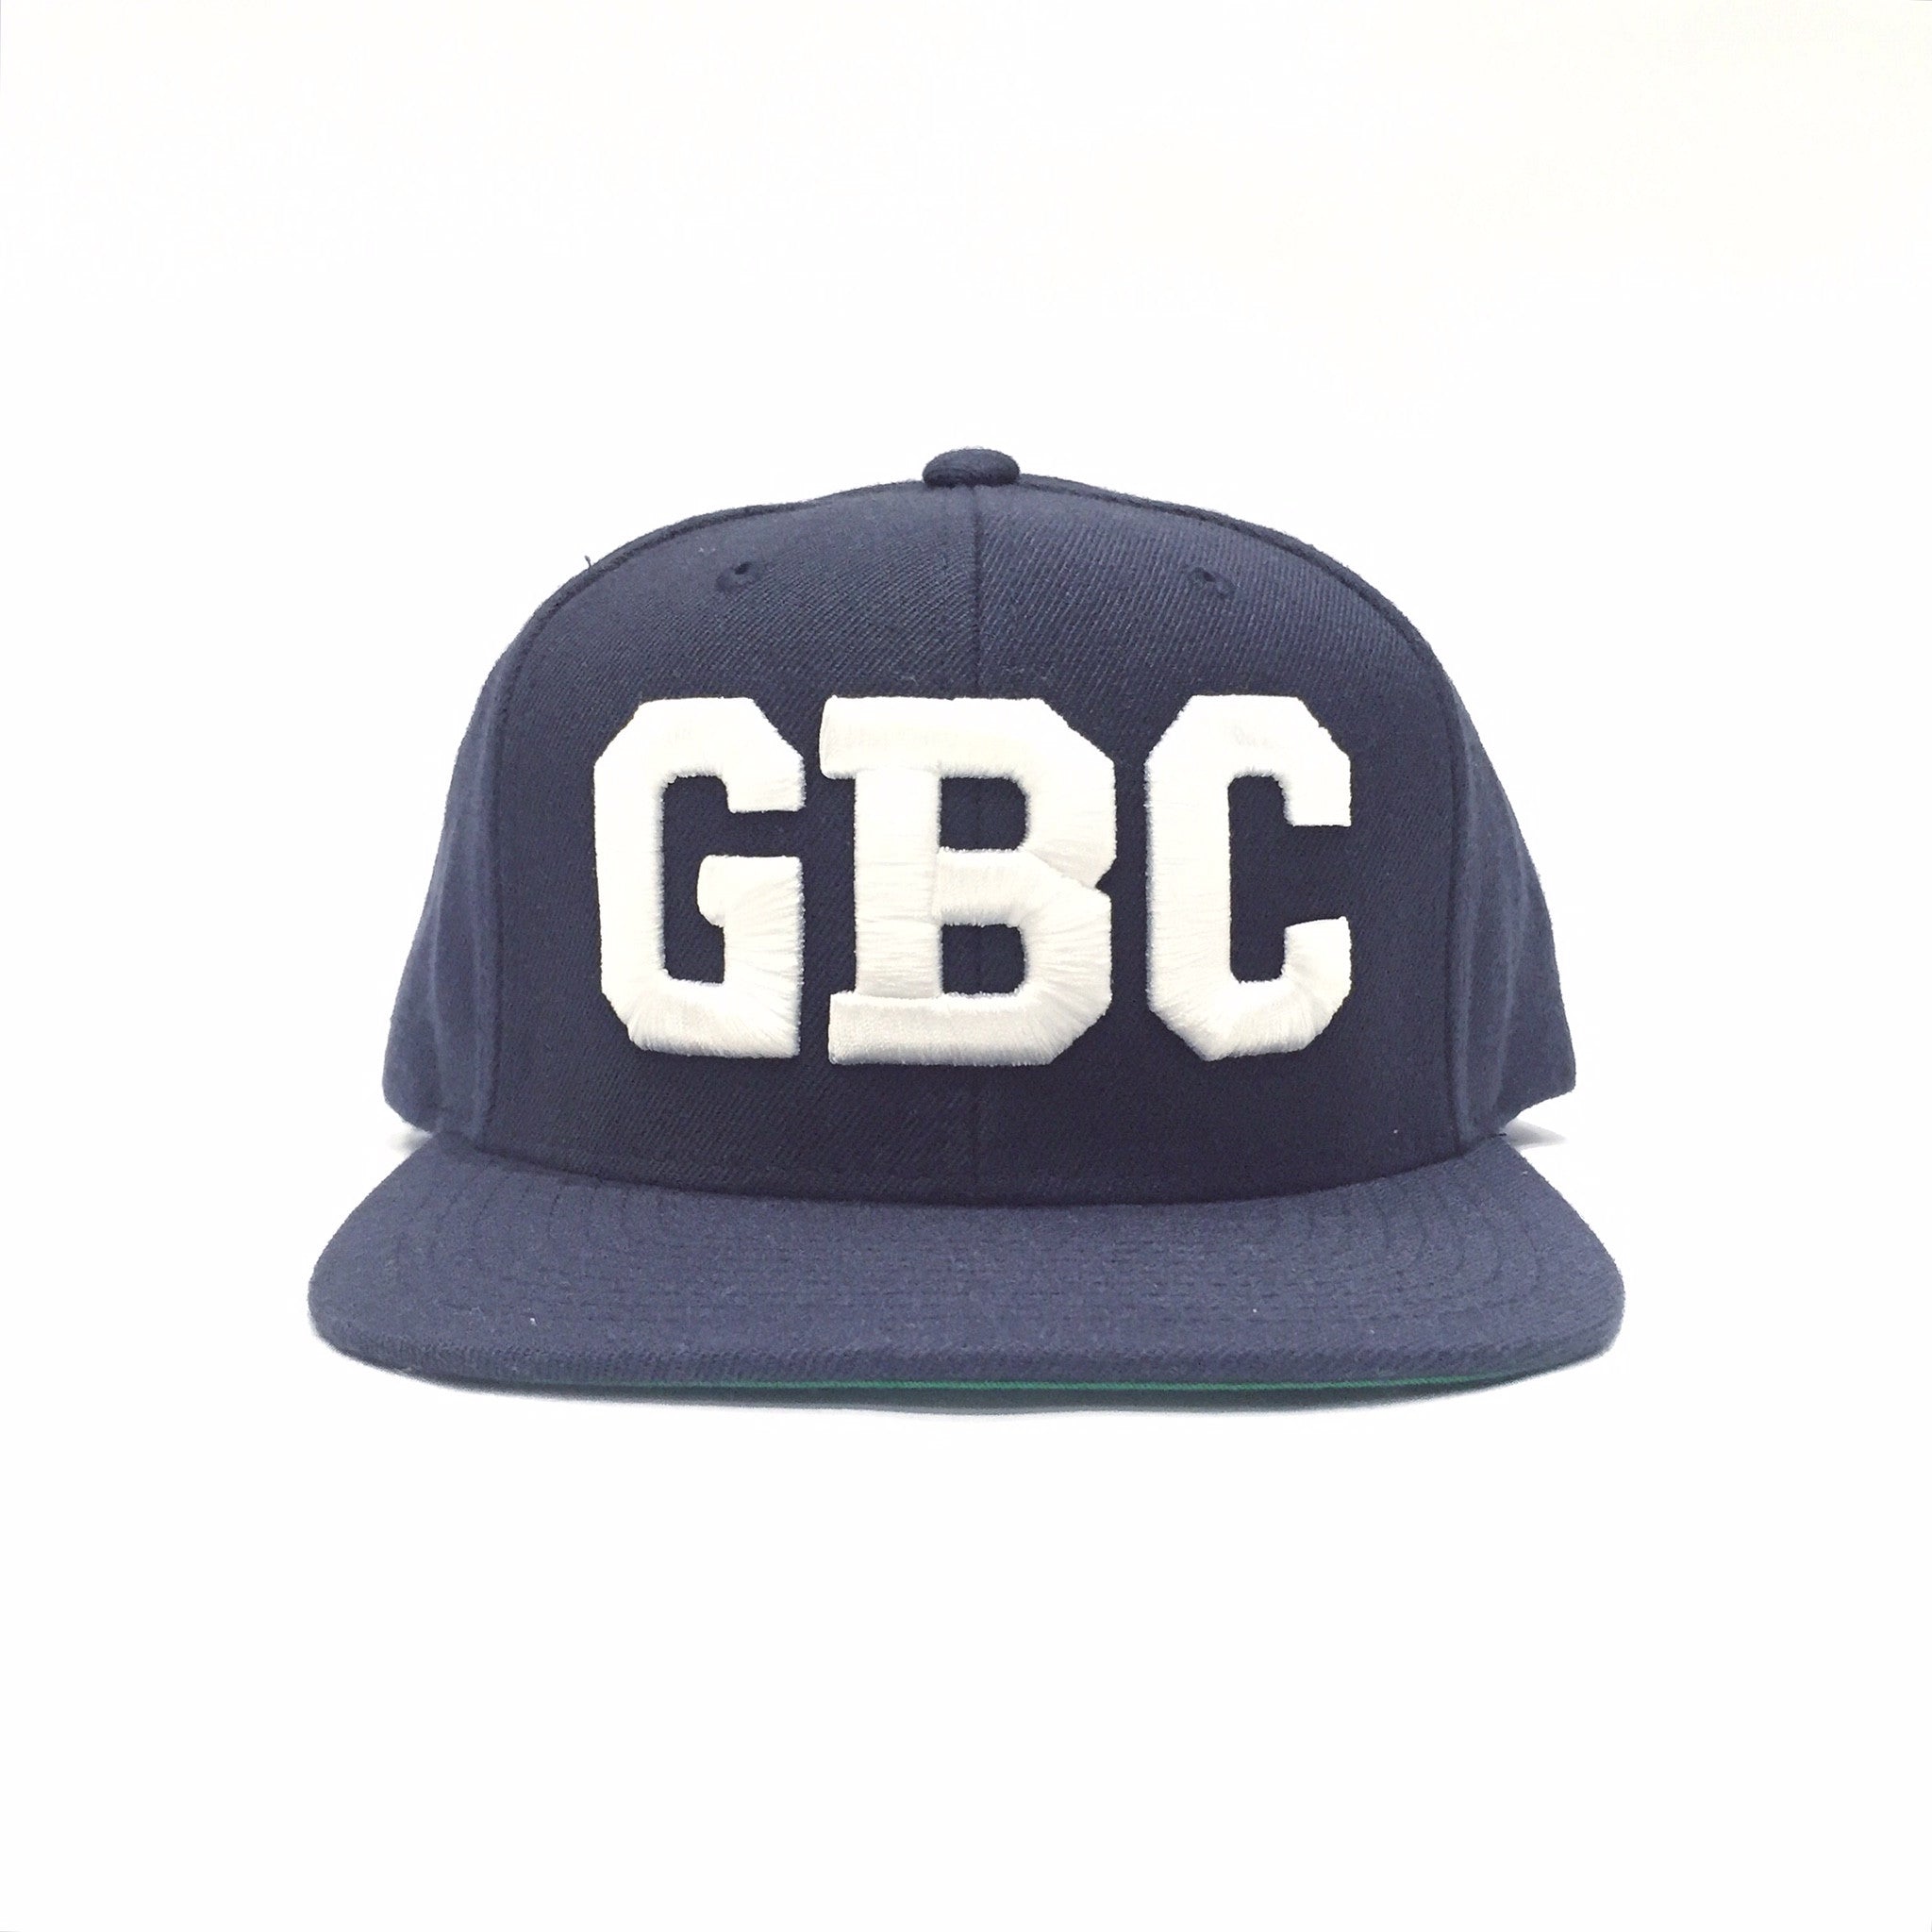 Guy Benson Collection "GBC" SnapBack Hat - Navy Blue/White